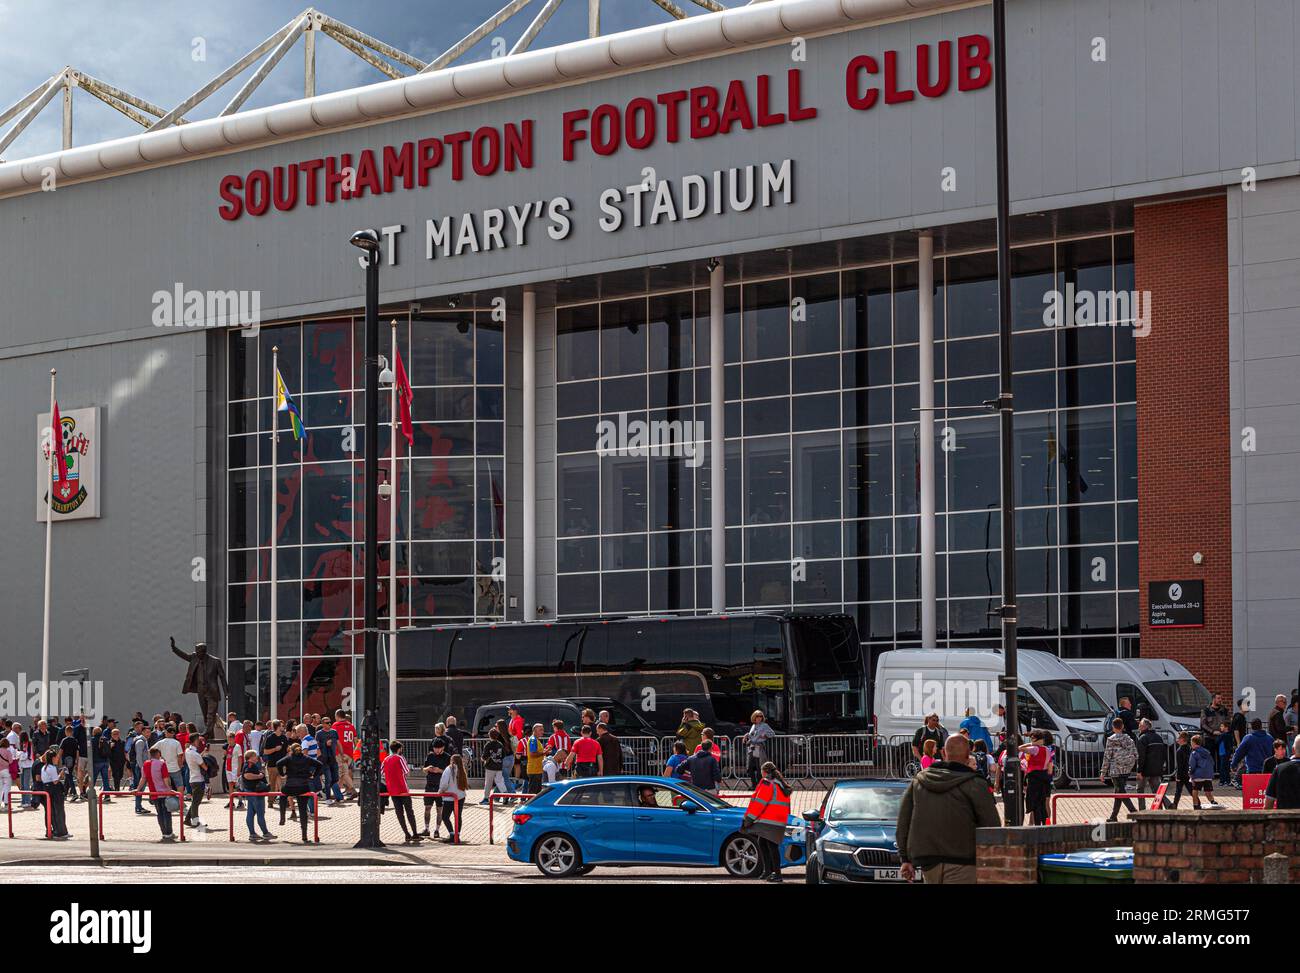 St. Mary's Stadium, Southampton Football Club, Hampshire, England, Großbritannien. Stockfoto